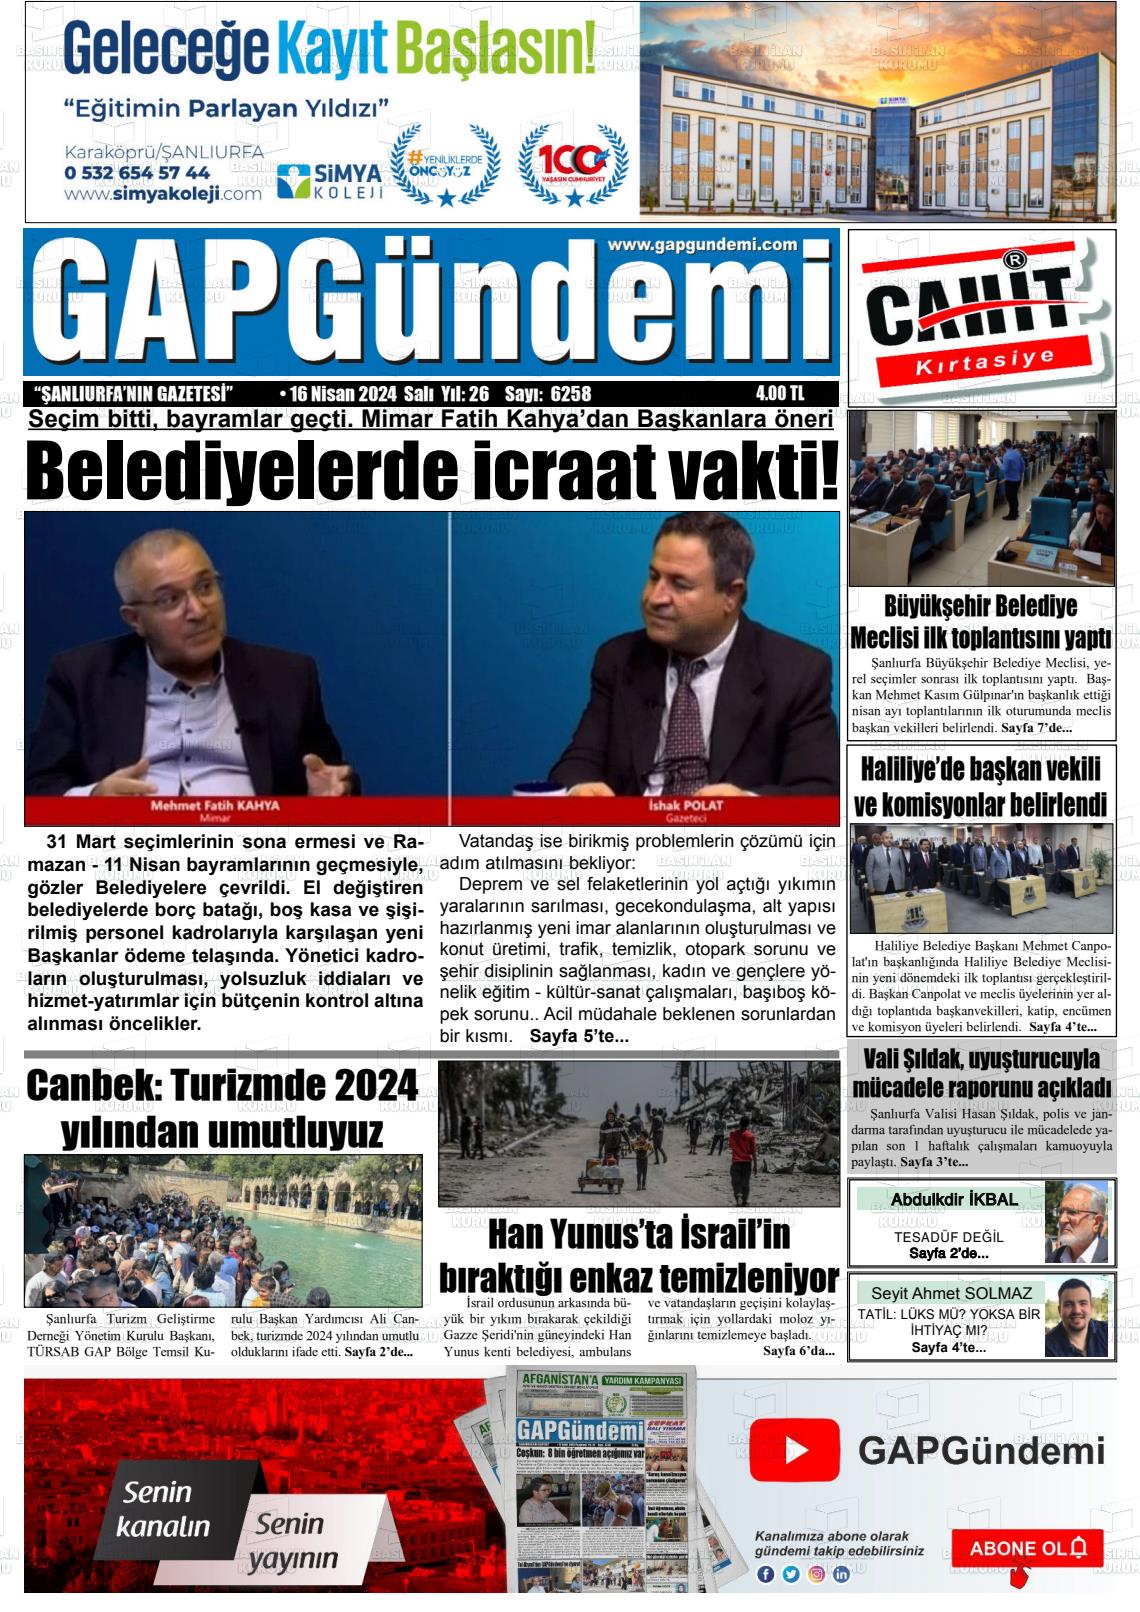 18 Nisan 2024 Gap Gündemi Gazete Manşeti